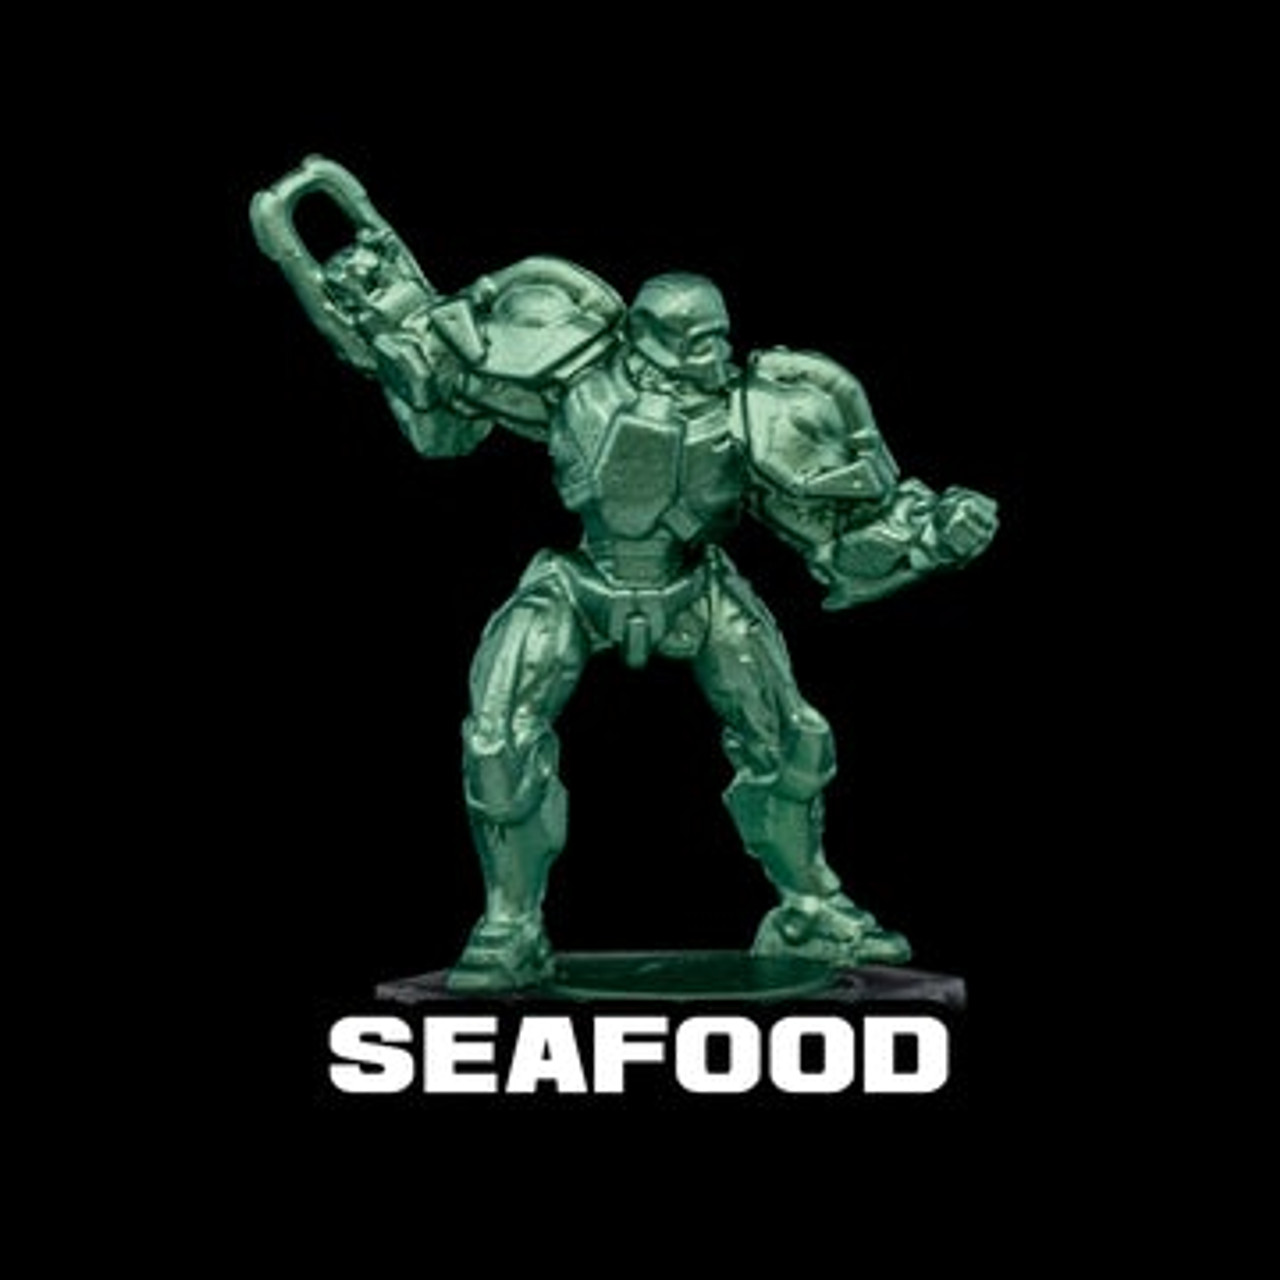 TD017 - Sea Food - Discontinued 20ml